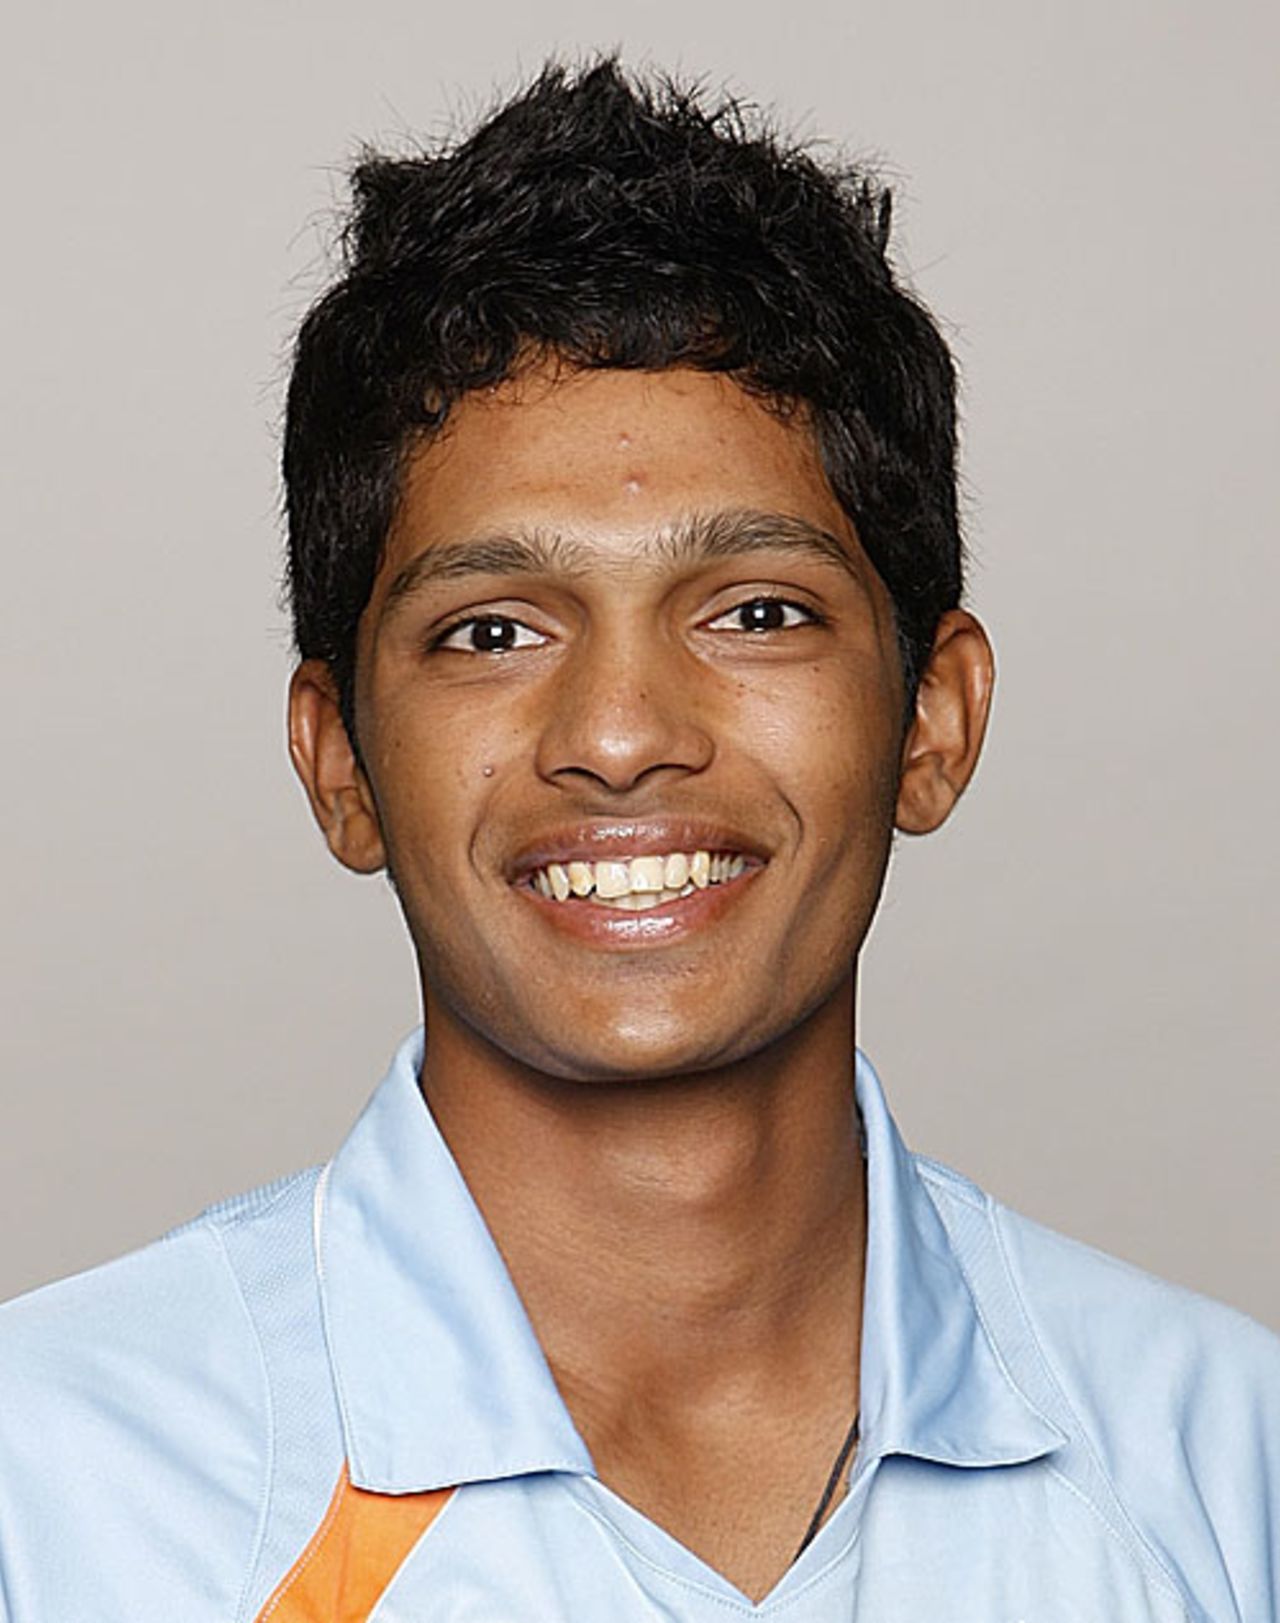 Gaurav Jathar, player portrait